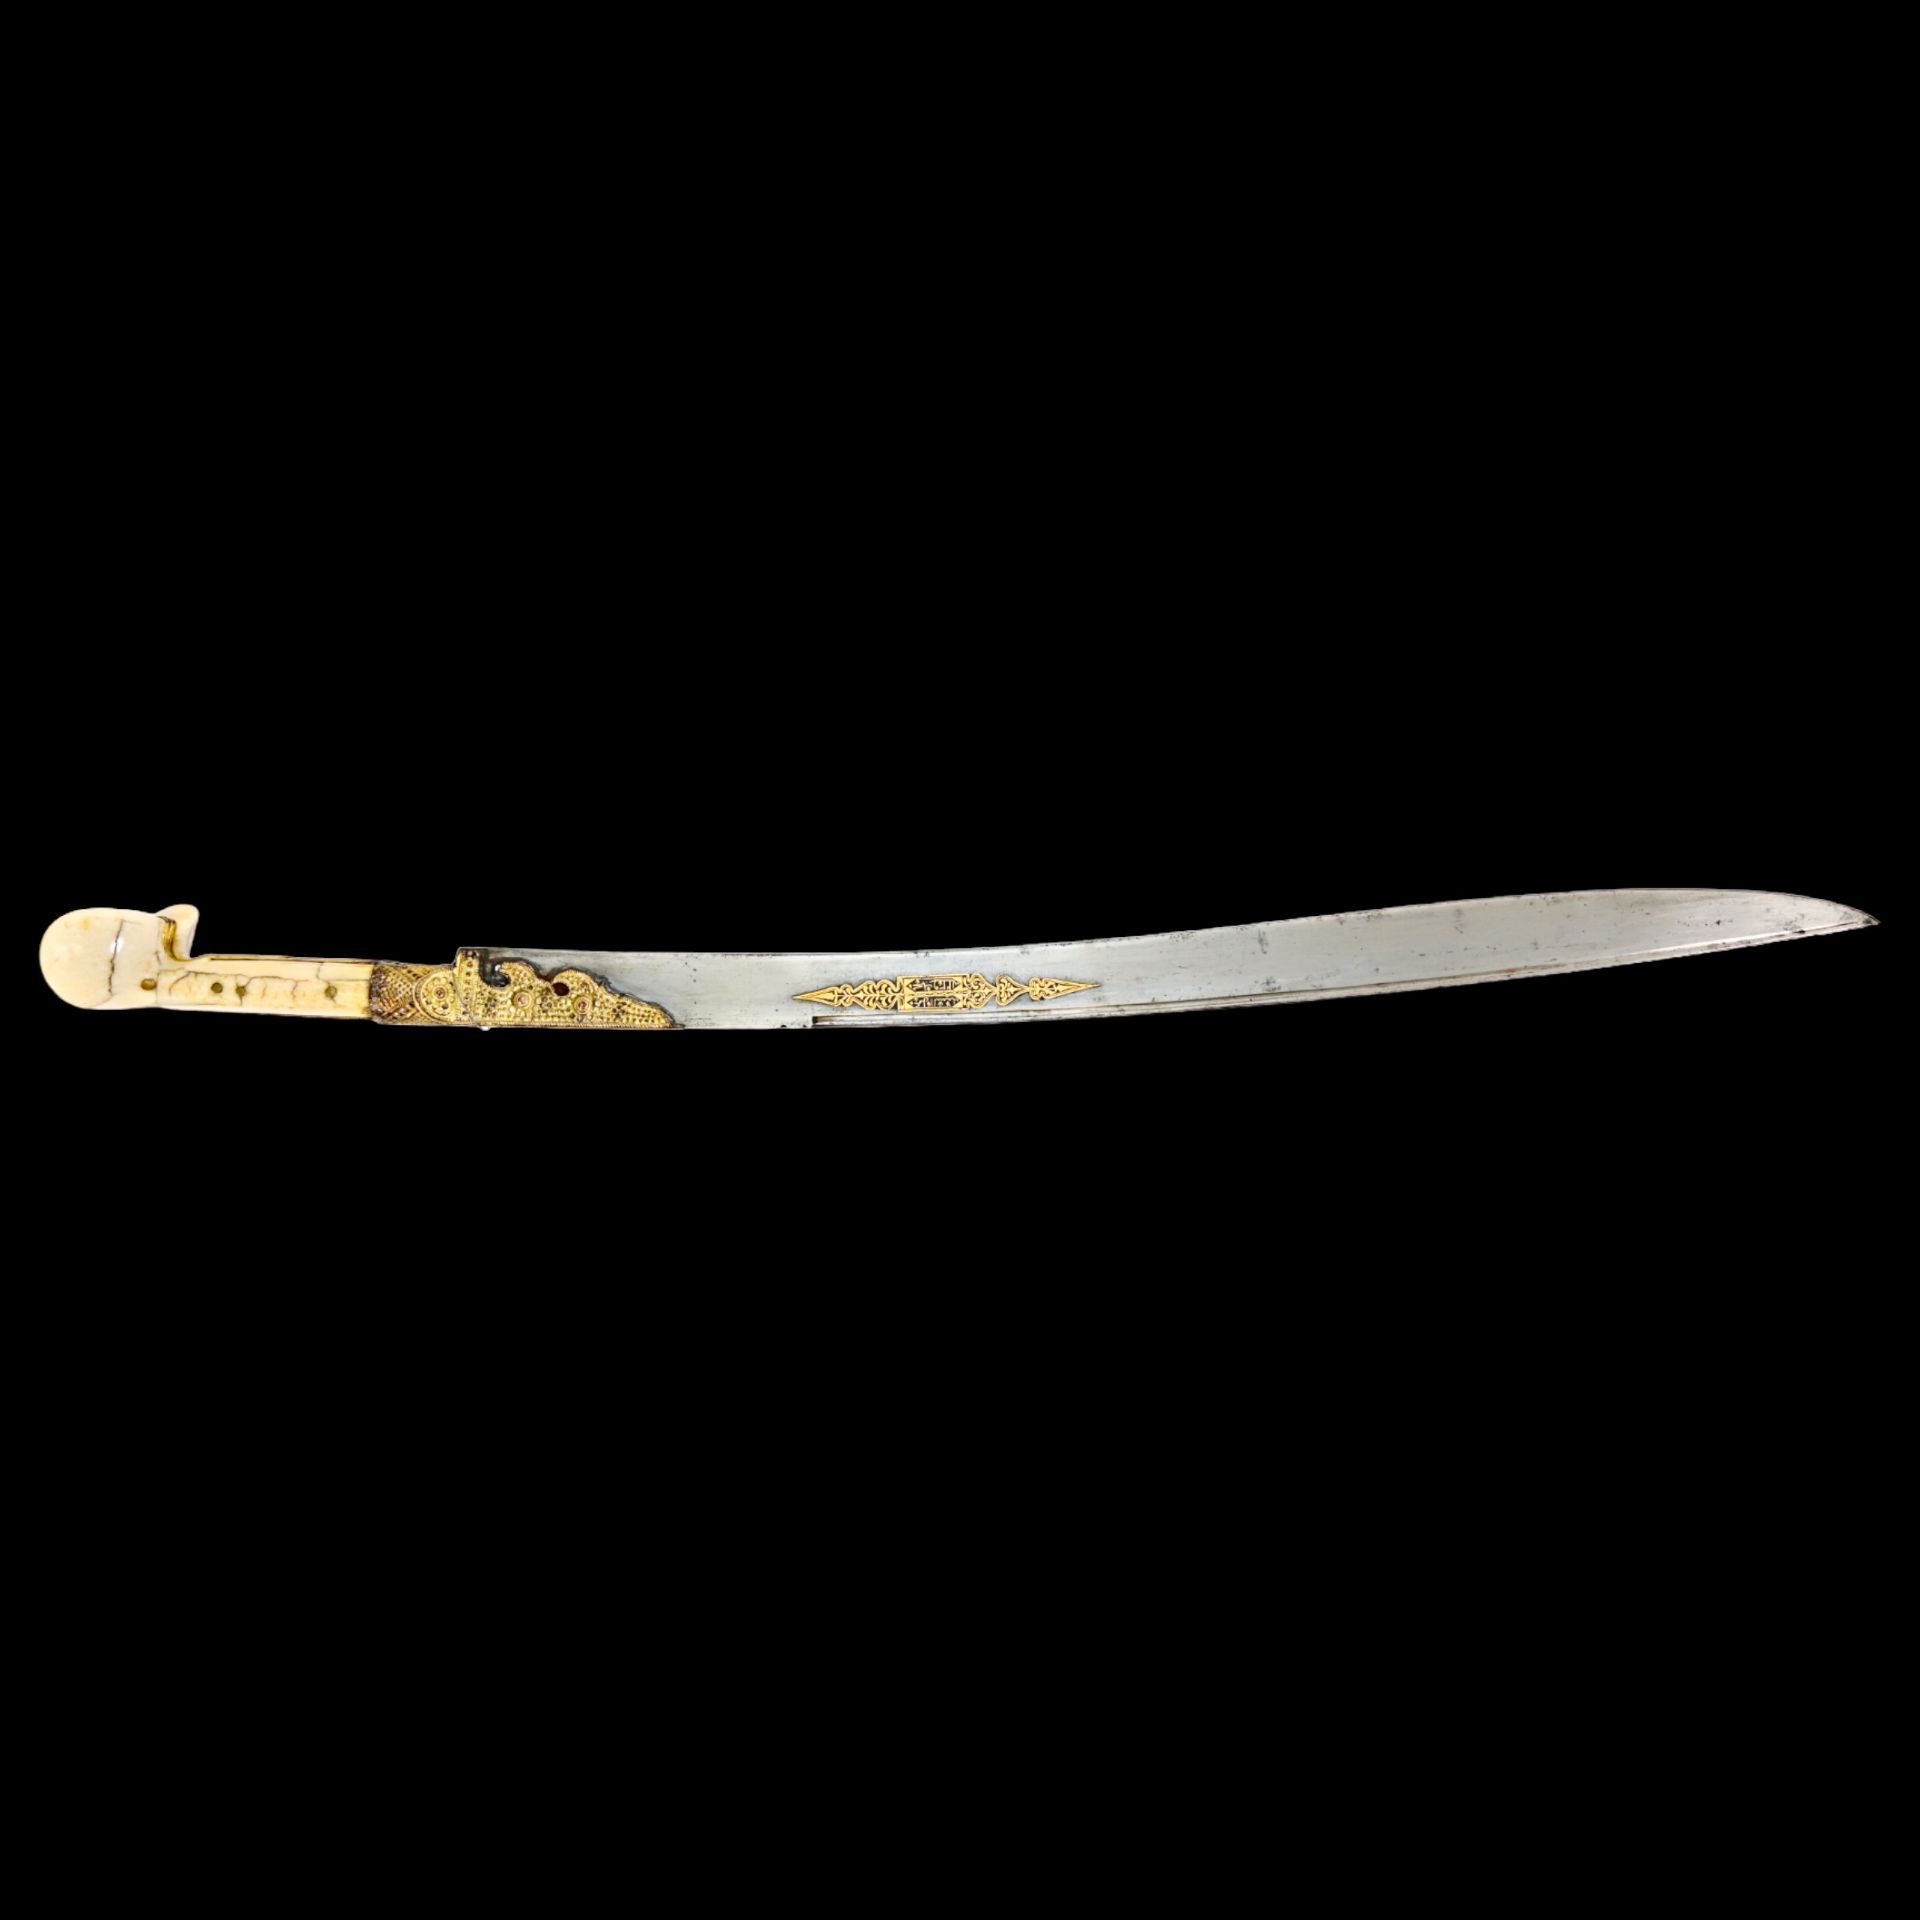 Magnificent Ottoman yatagan sword with bone hilt and gold kofgari on the blade, 1823. - Image 24 of 32